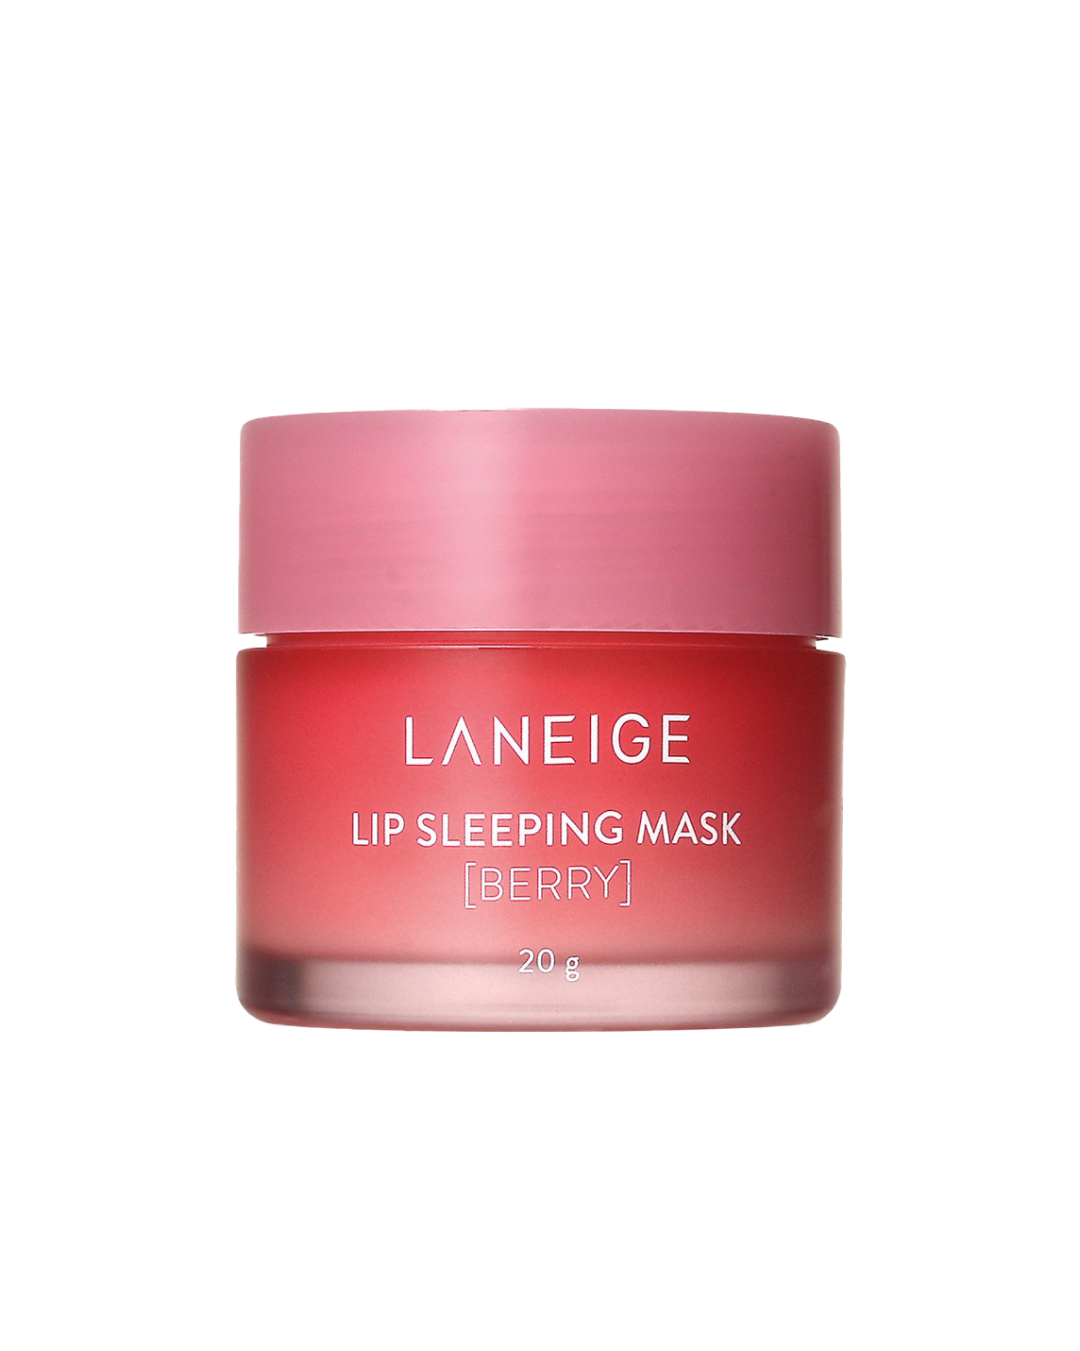 Laneige Lip Sleeping Mask EX in Berry (20g) - Best Buy World Philippines